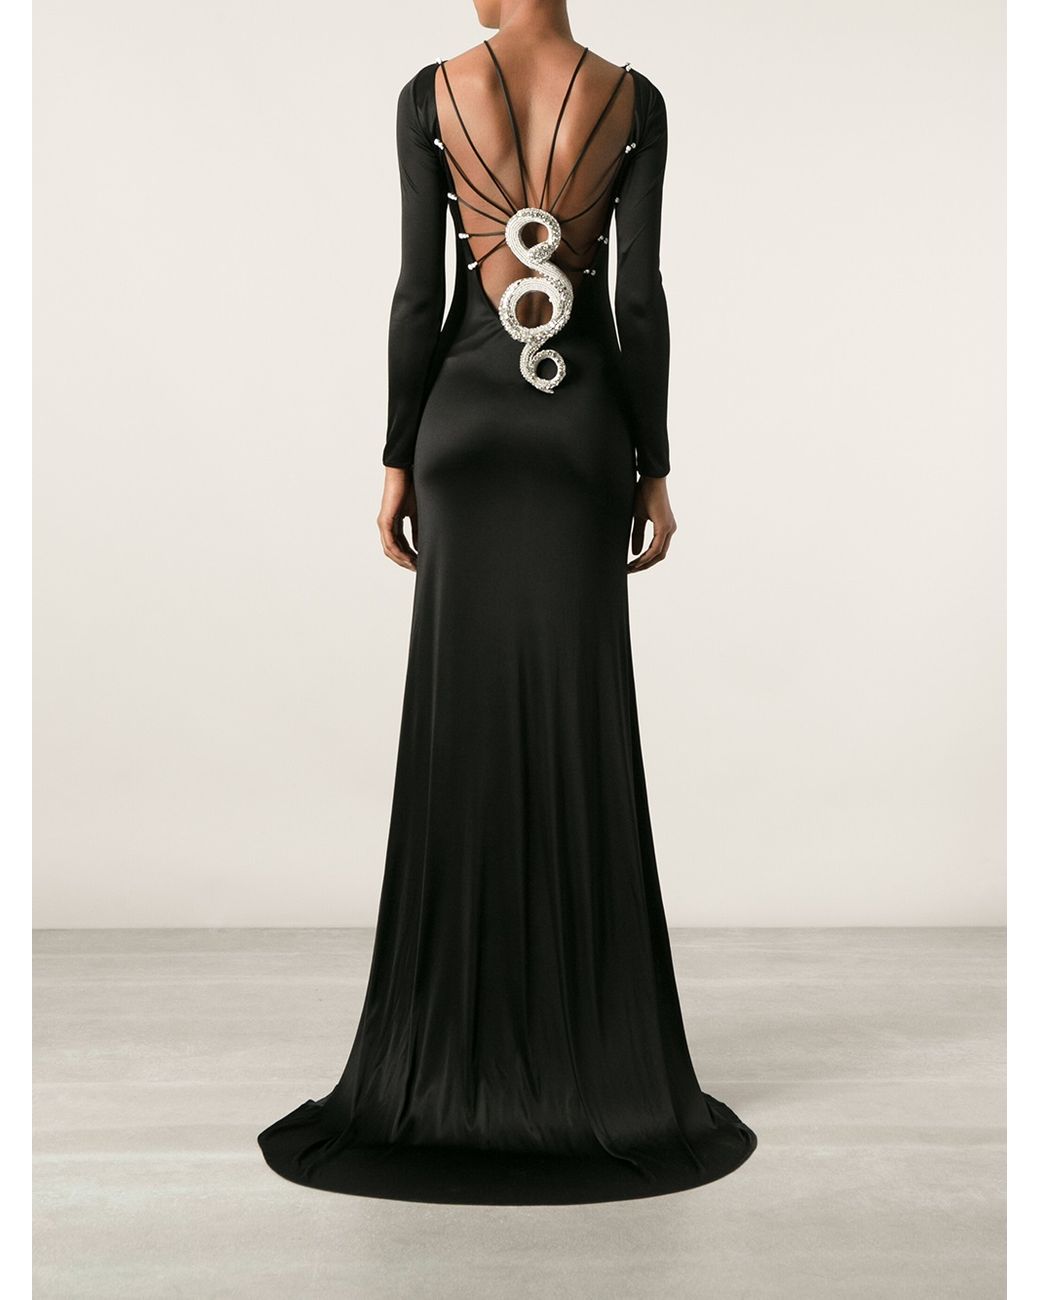 Roberto Cavalli Snake Back Evening Dress in Black | Lyst